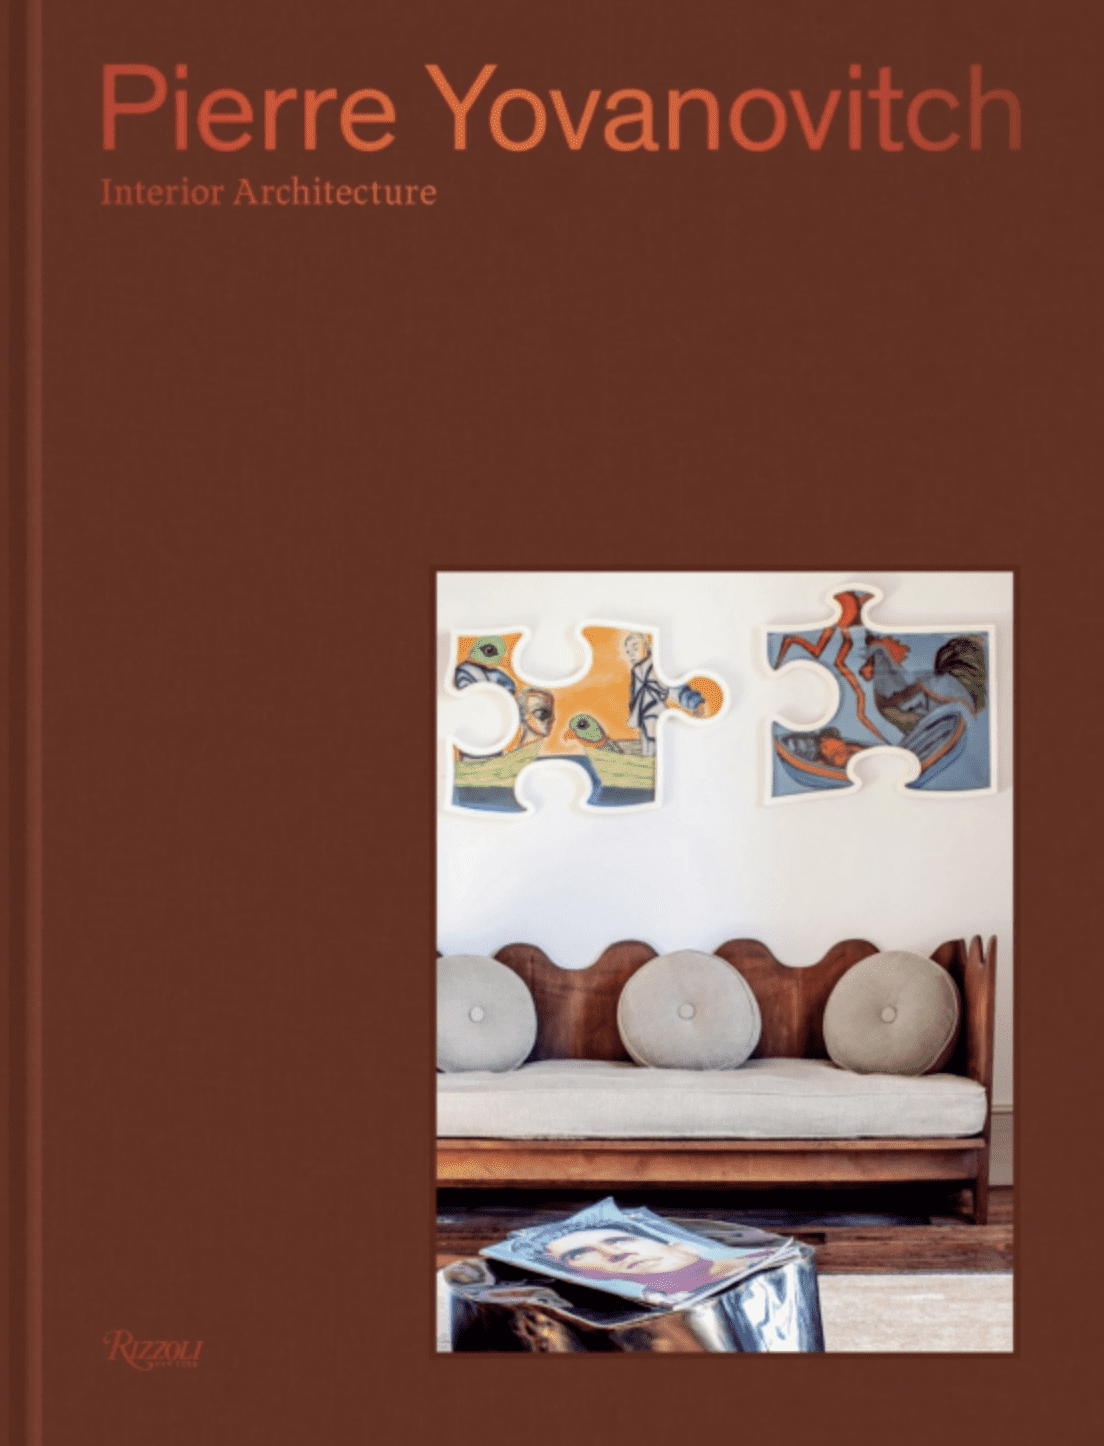 Interior Architecture: Pierre Yovanovitch